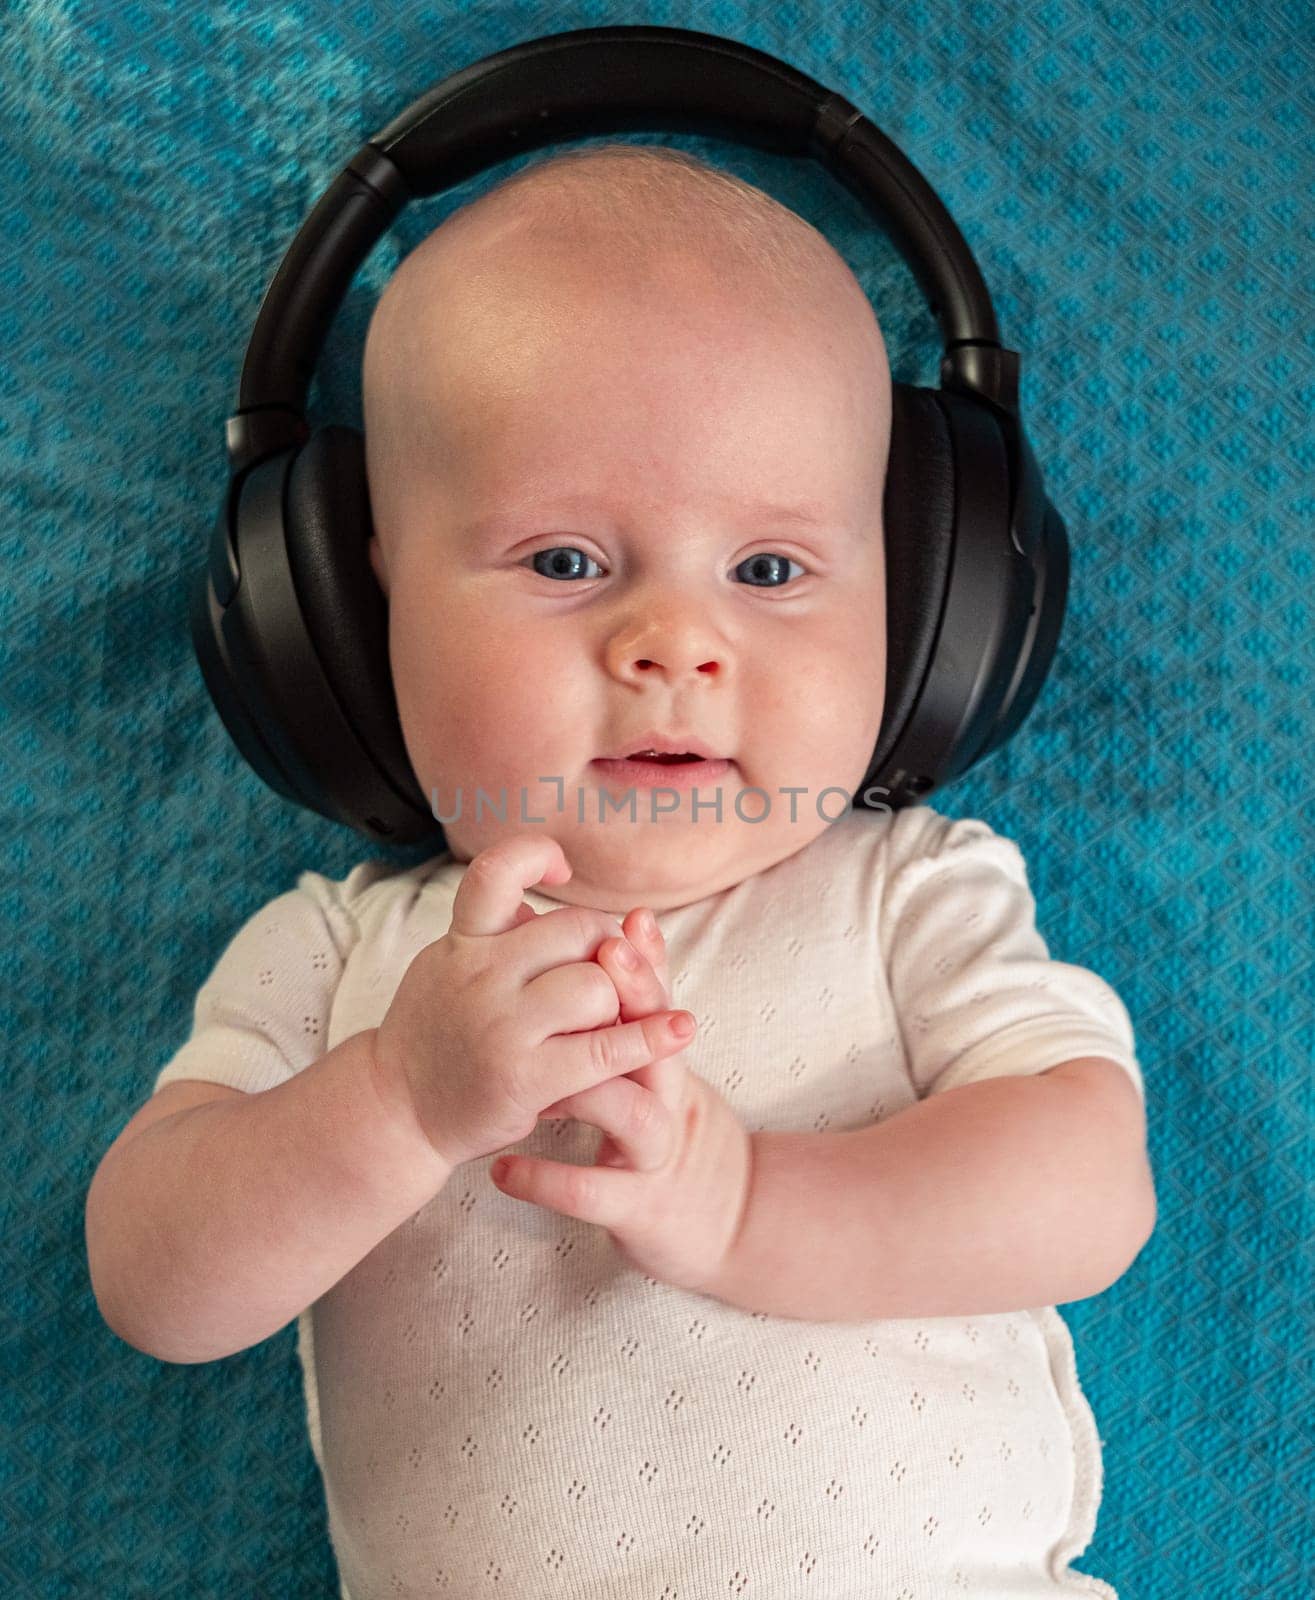 Little boy on blue blanket background with headphones